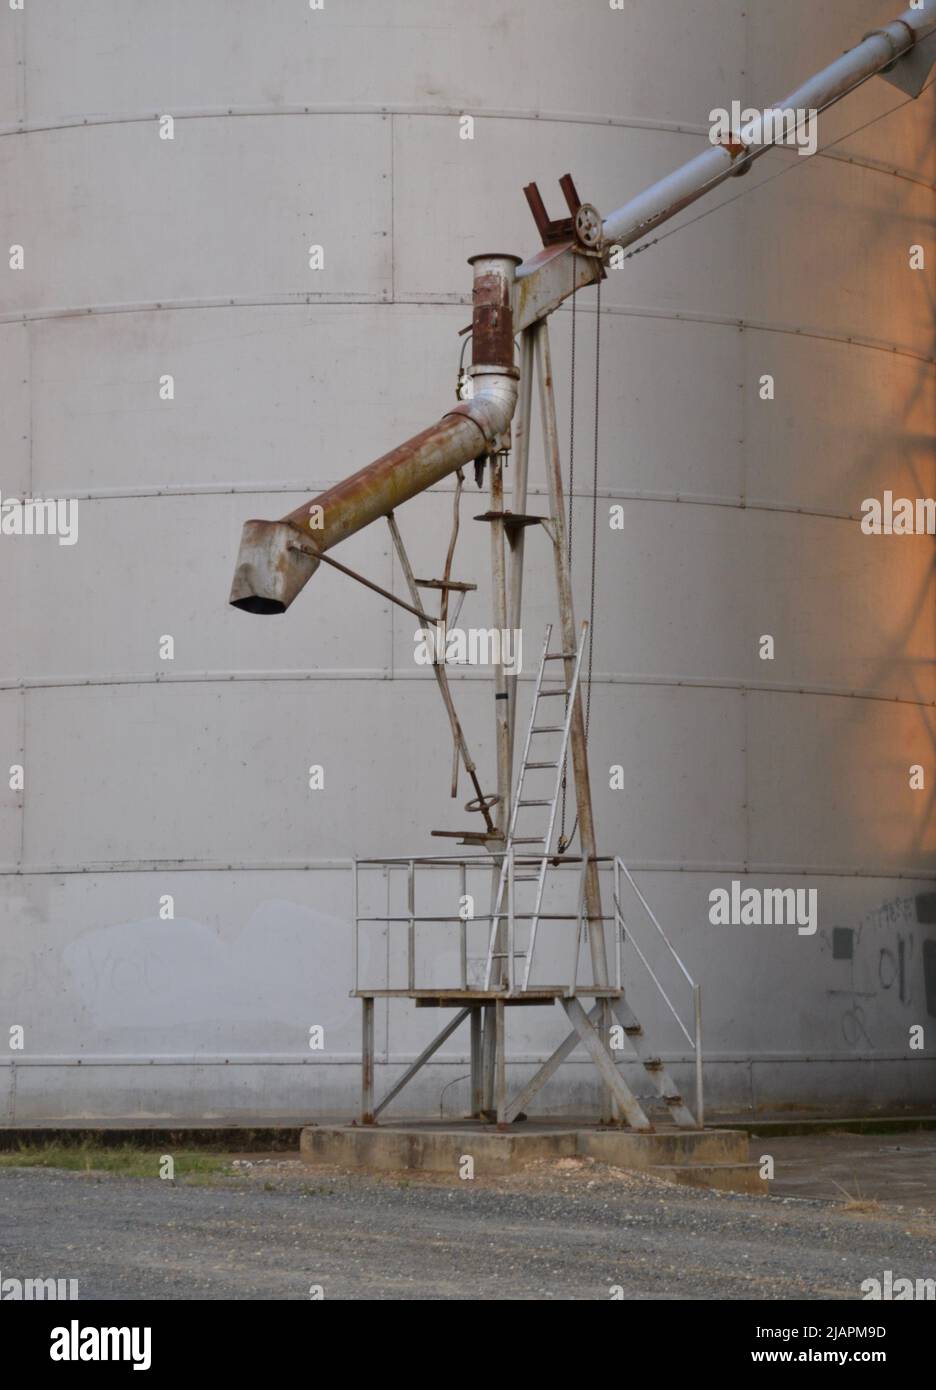 A steel, metal or aluminium tube shute and loading hopper on the side of a grain silo in regional Australian farming community of Rutherglen, Victoria Stock Photo